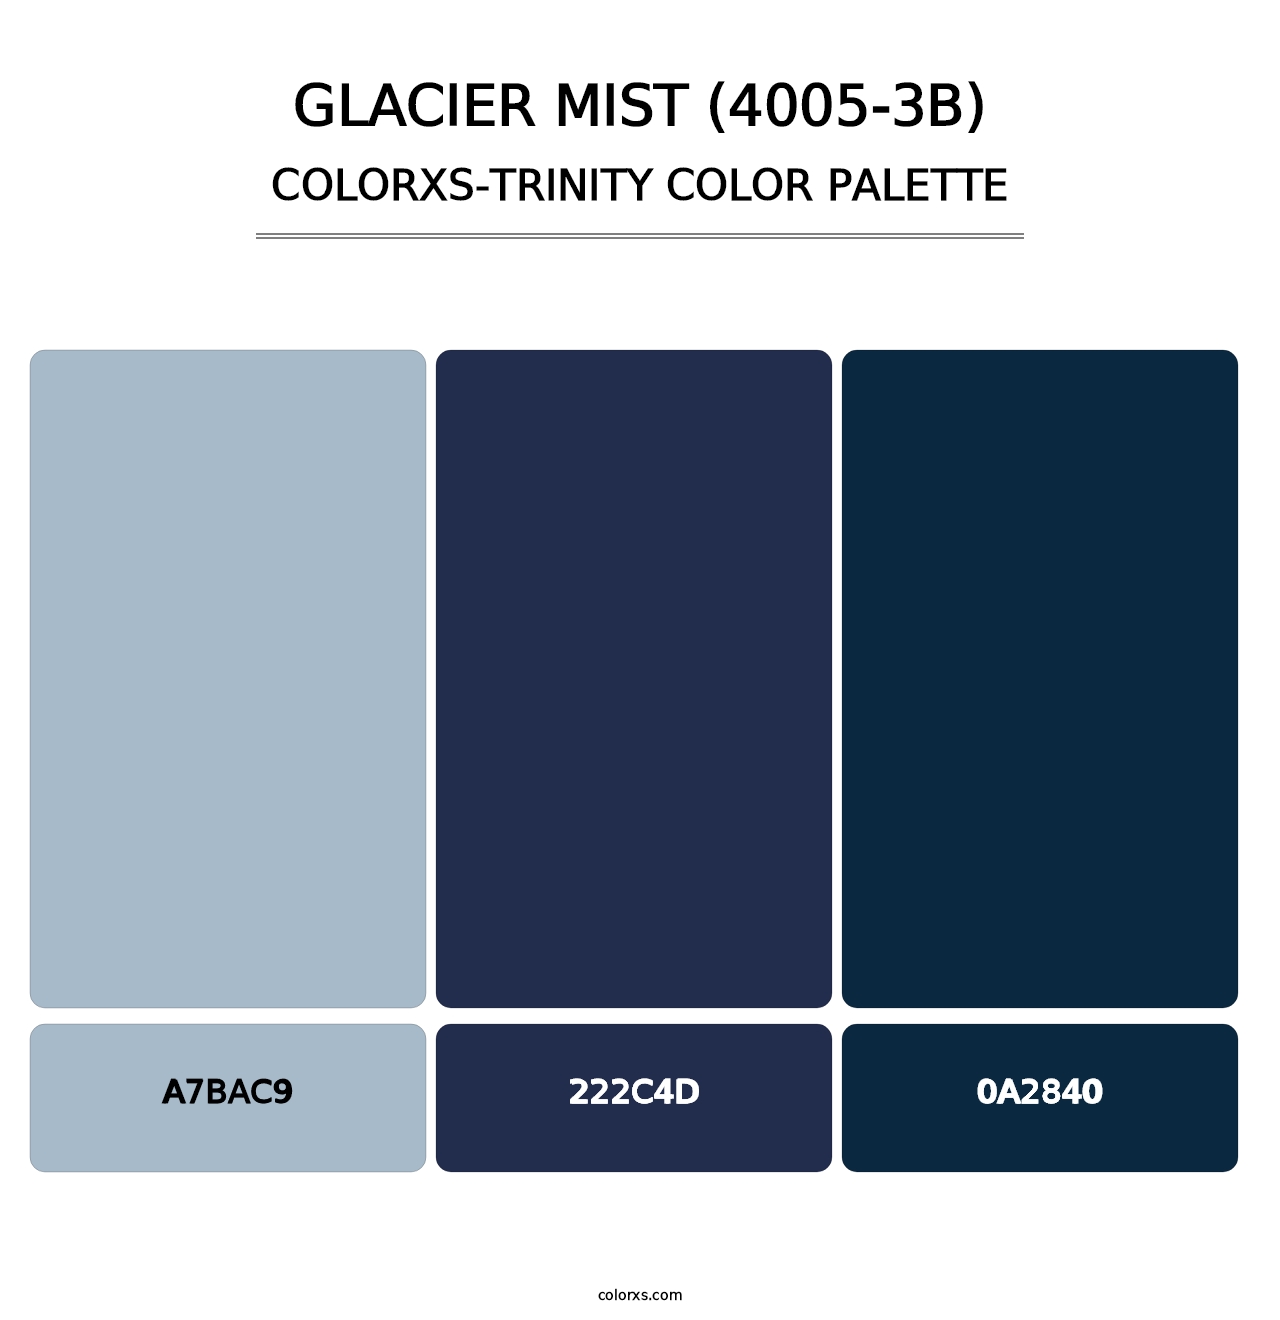 Glacier Mist (4005-3B) - Colorxs Trinity Palette